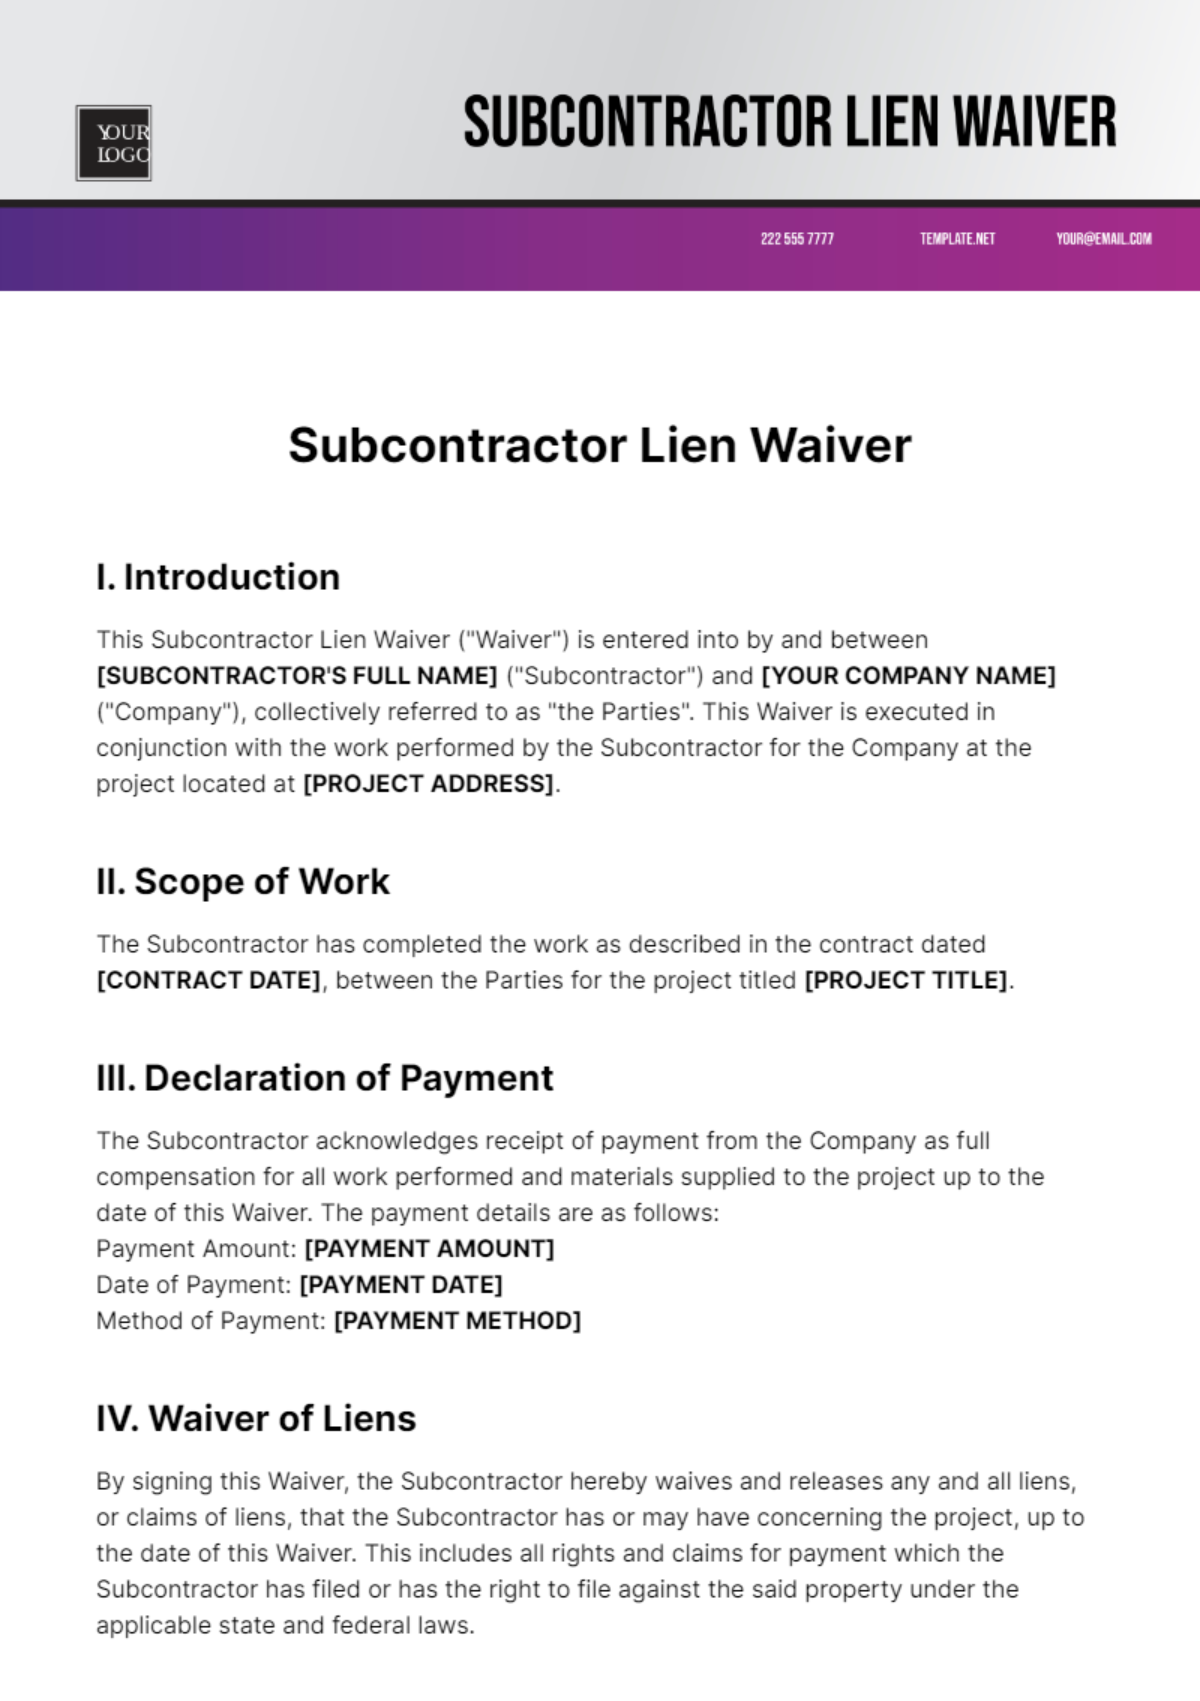 Subcontractor Lien Waiver Template